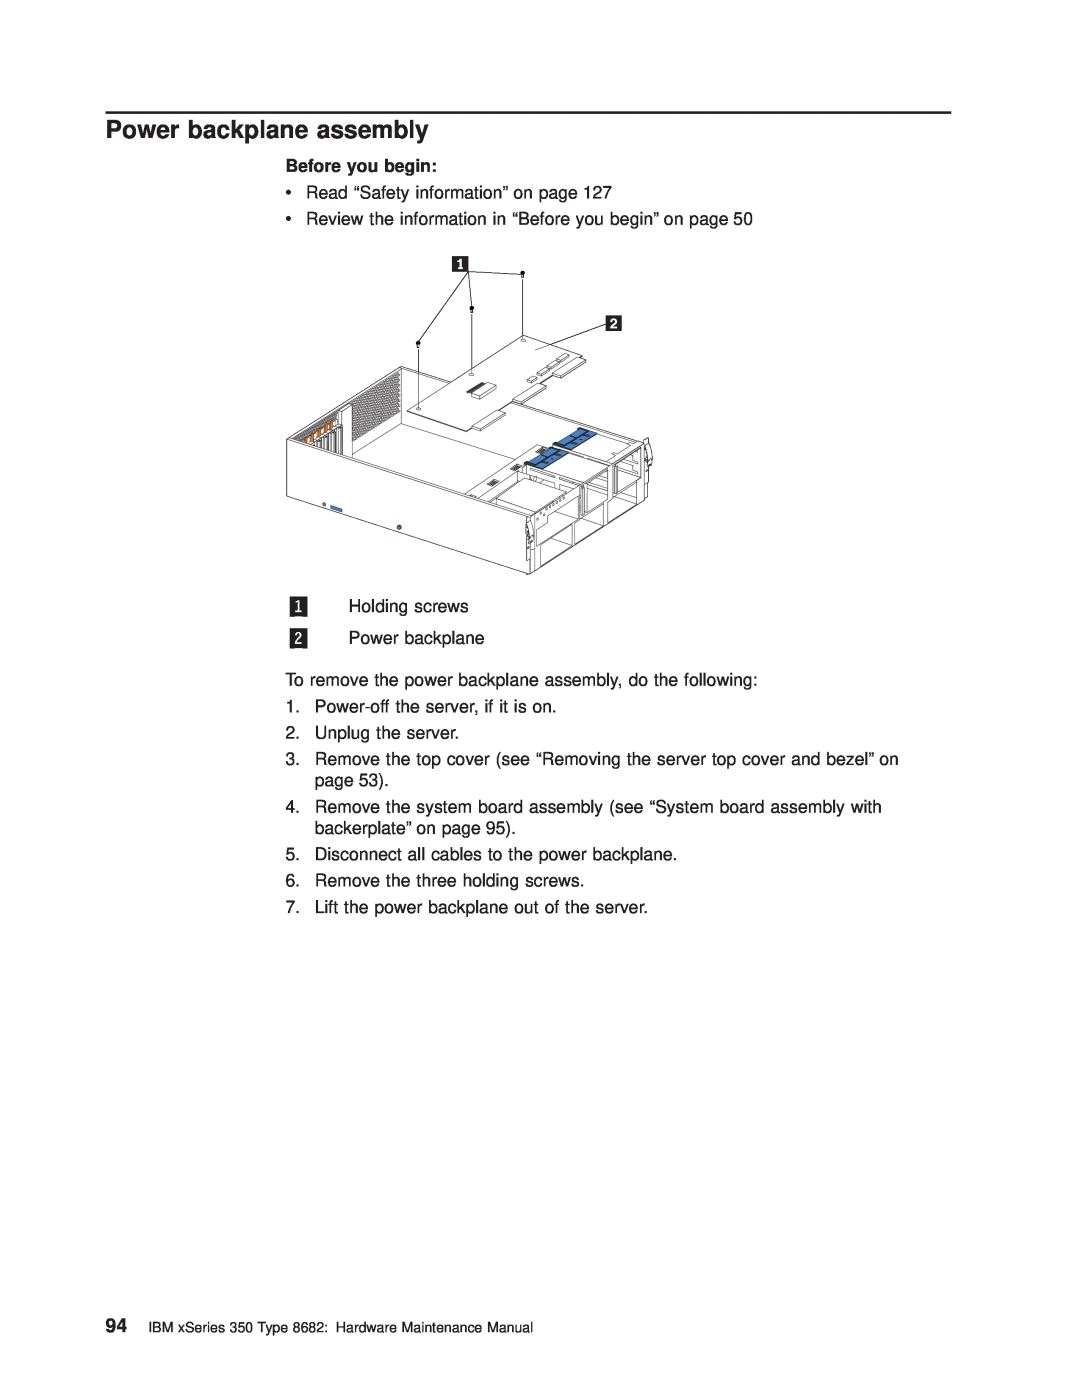 IBM manual Power backplane assembly, Before you begin, IBM xSeries 350 Type 8682 Hardware Maintenance Manual 